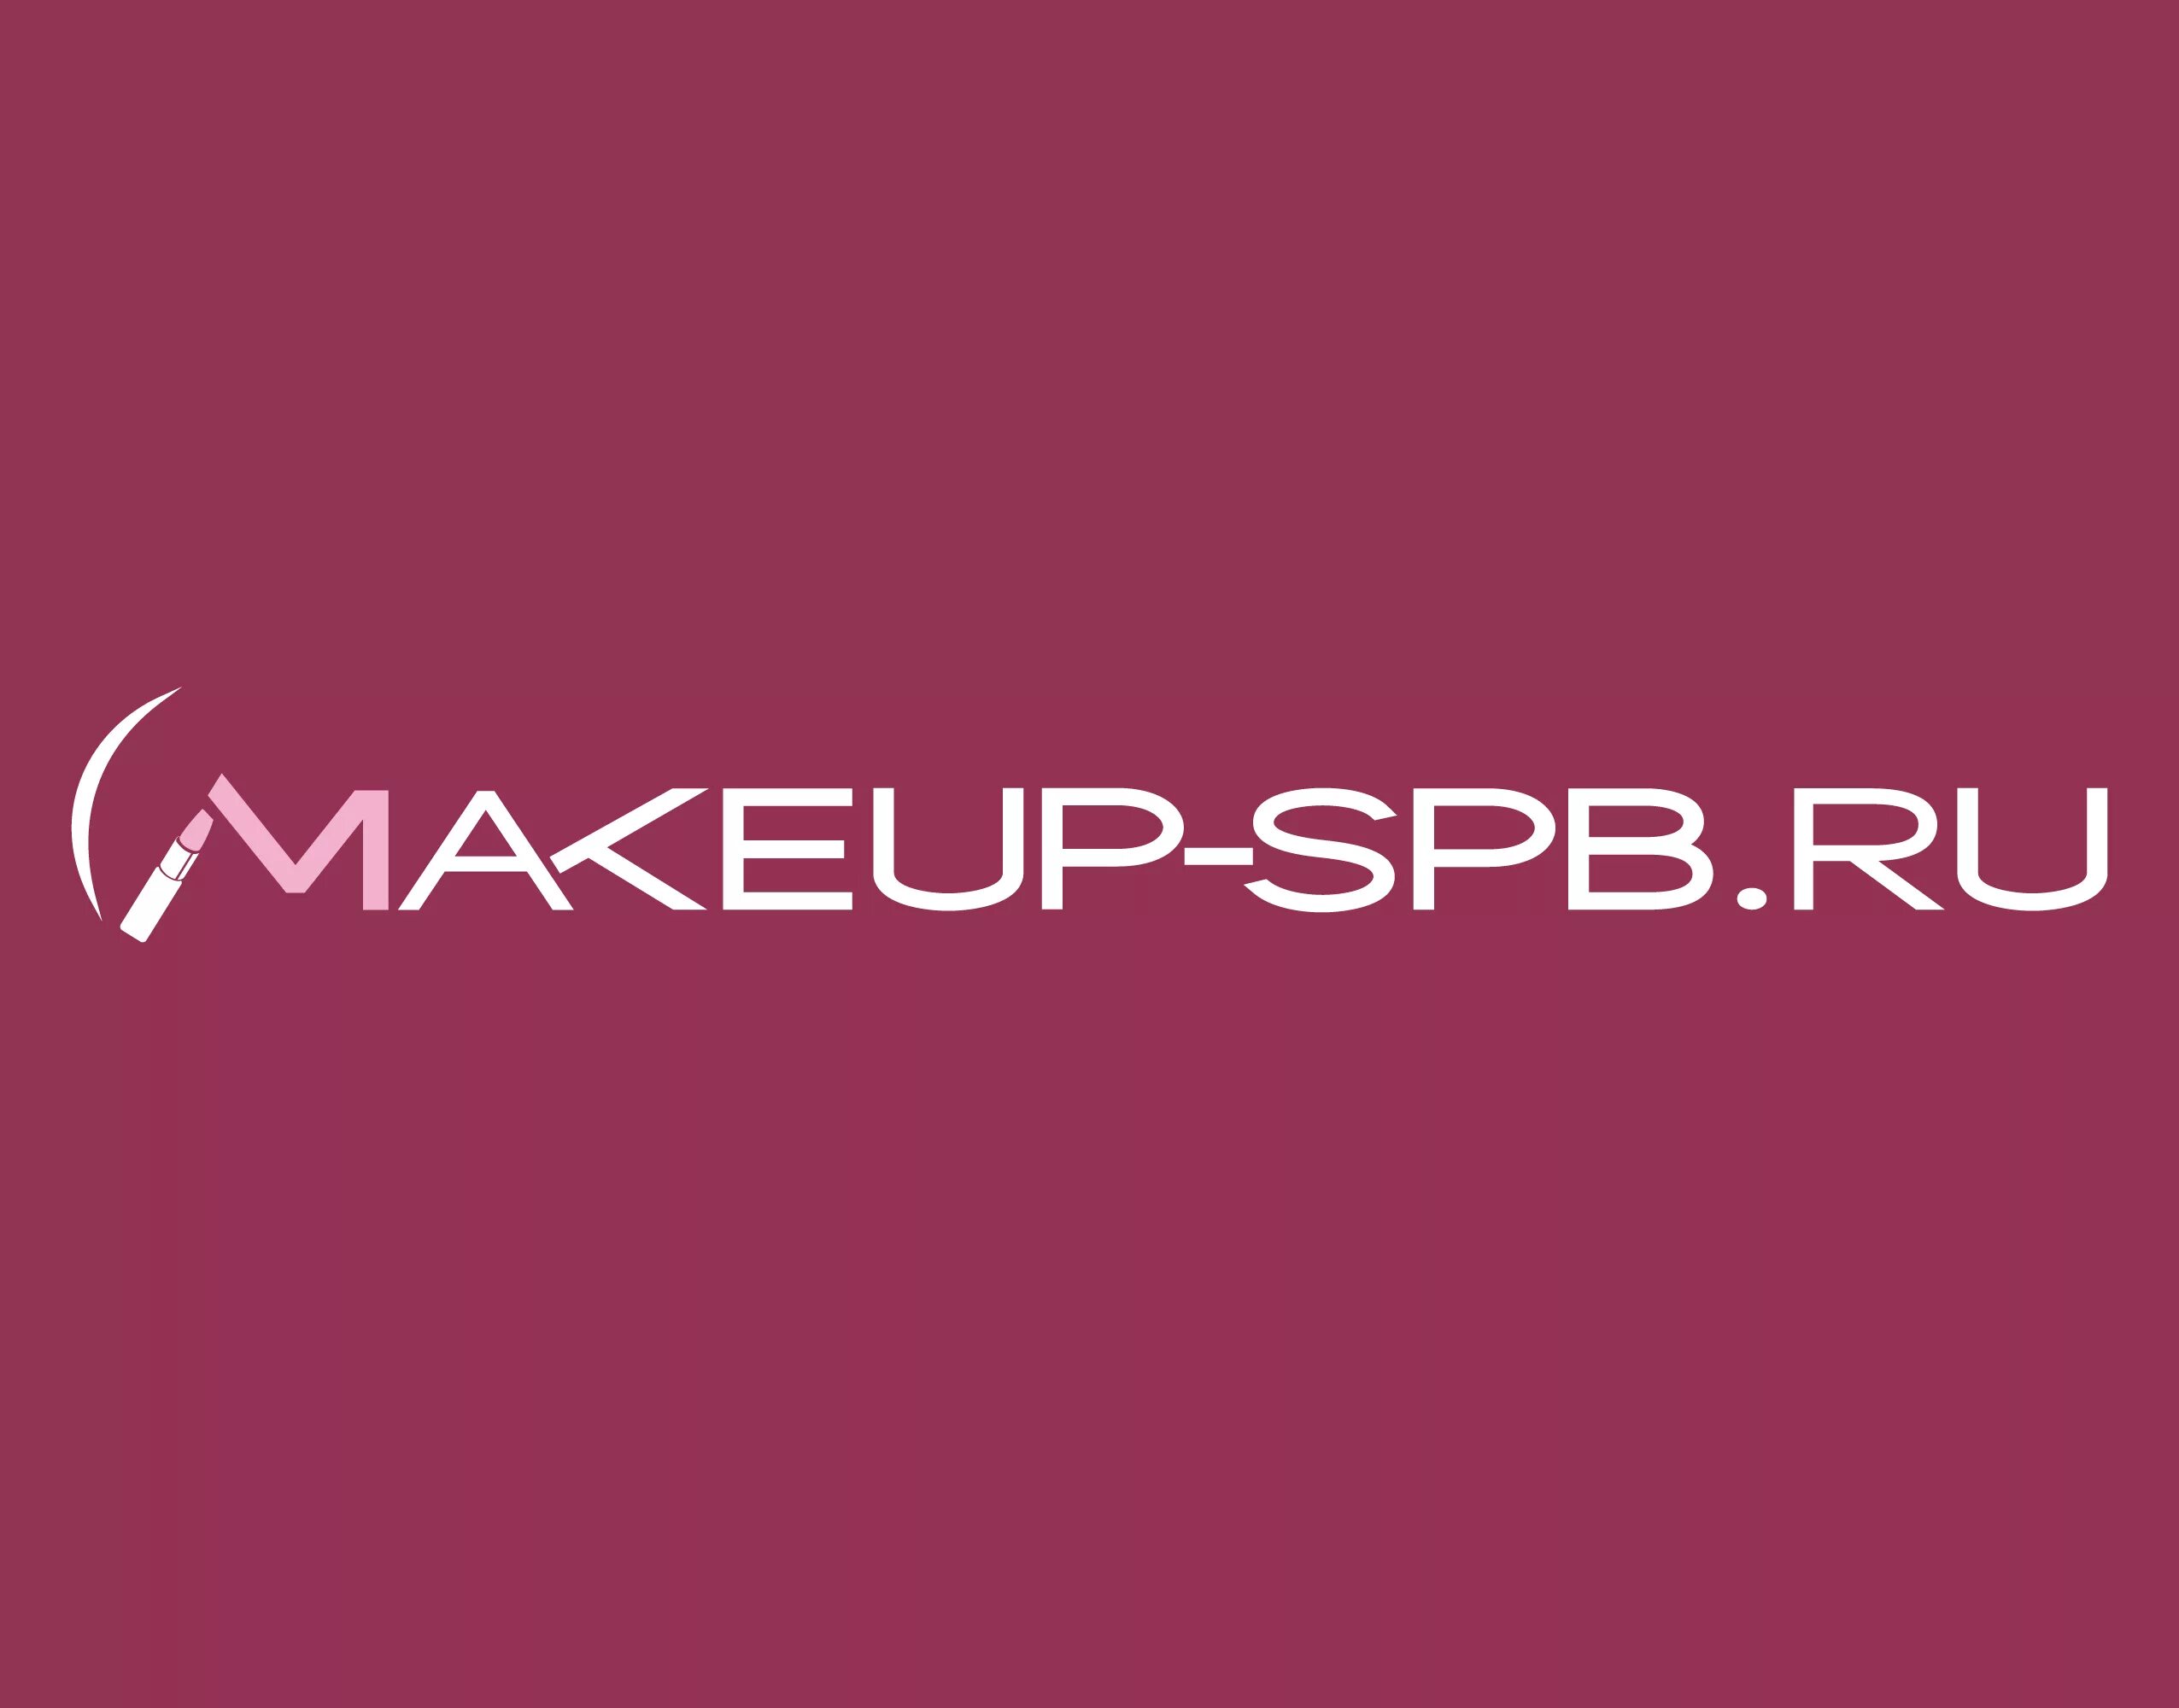 Ru spb com. Make up spb. Makeup spb магазин. Makeup spb ru интернет. Themusicshop. Spb. Ru.